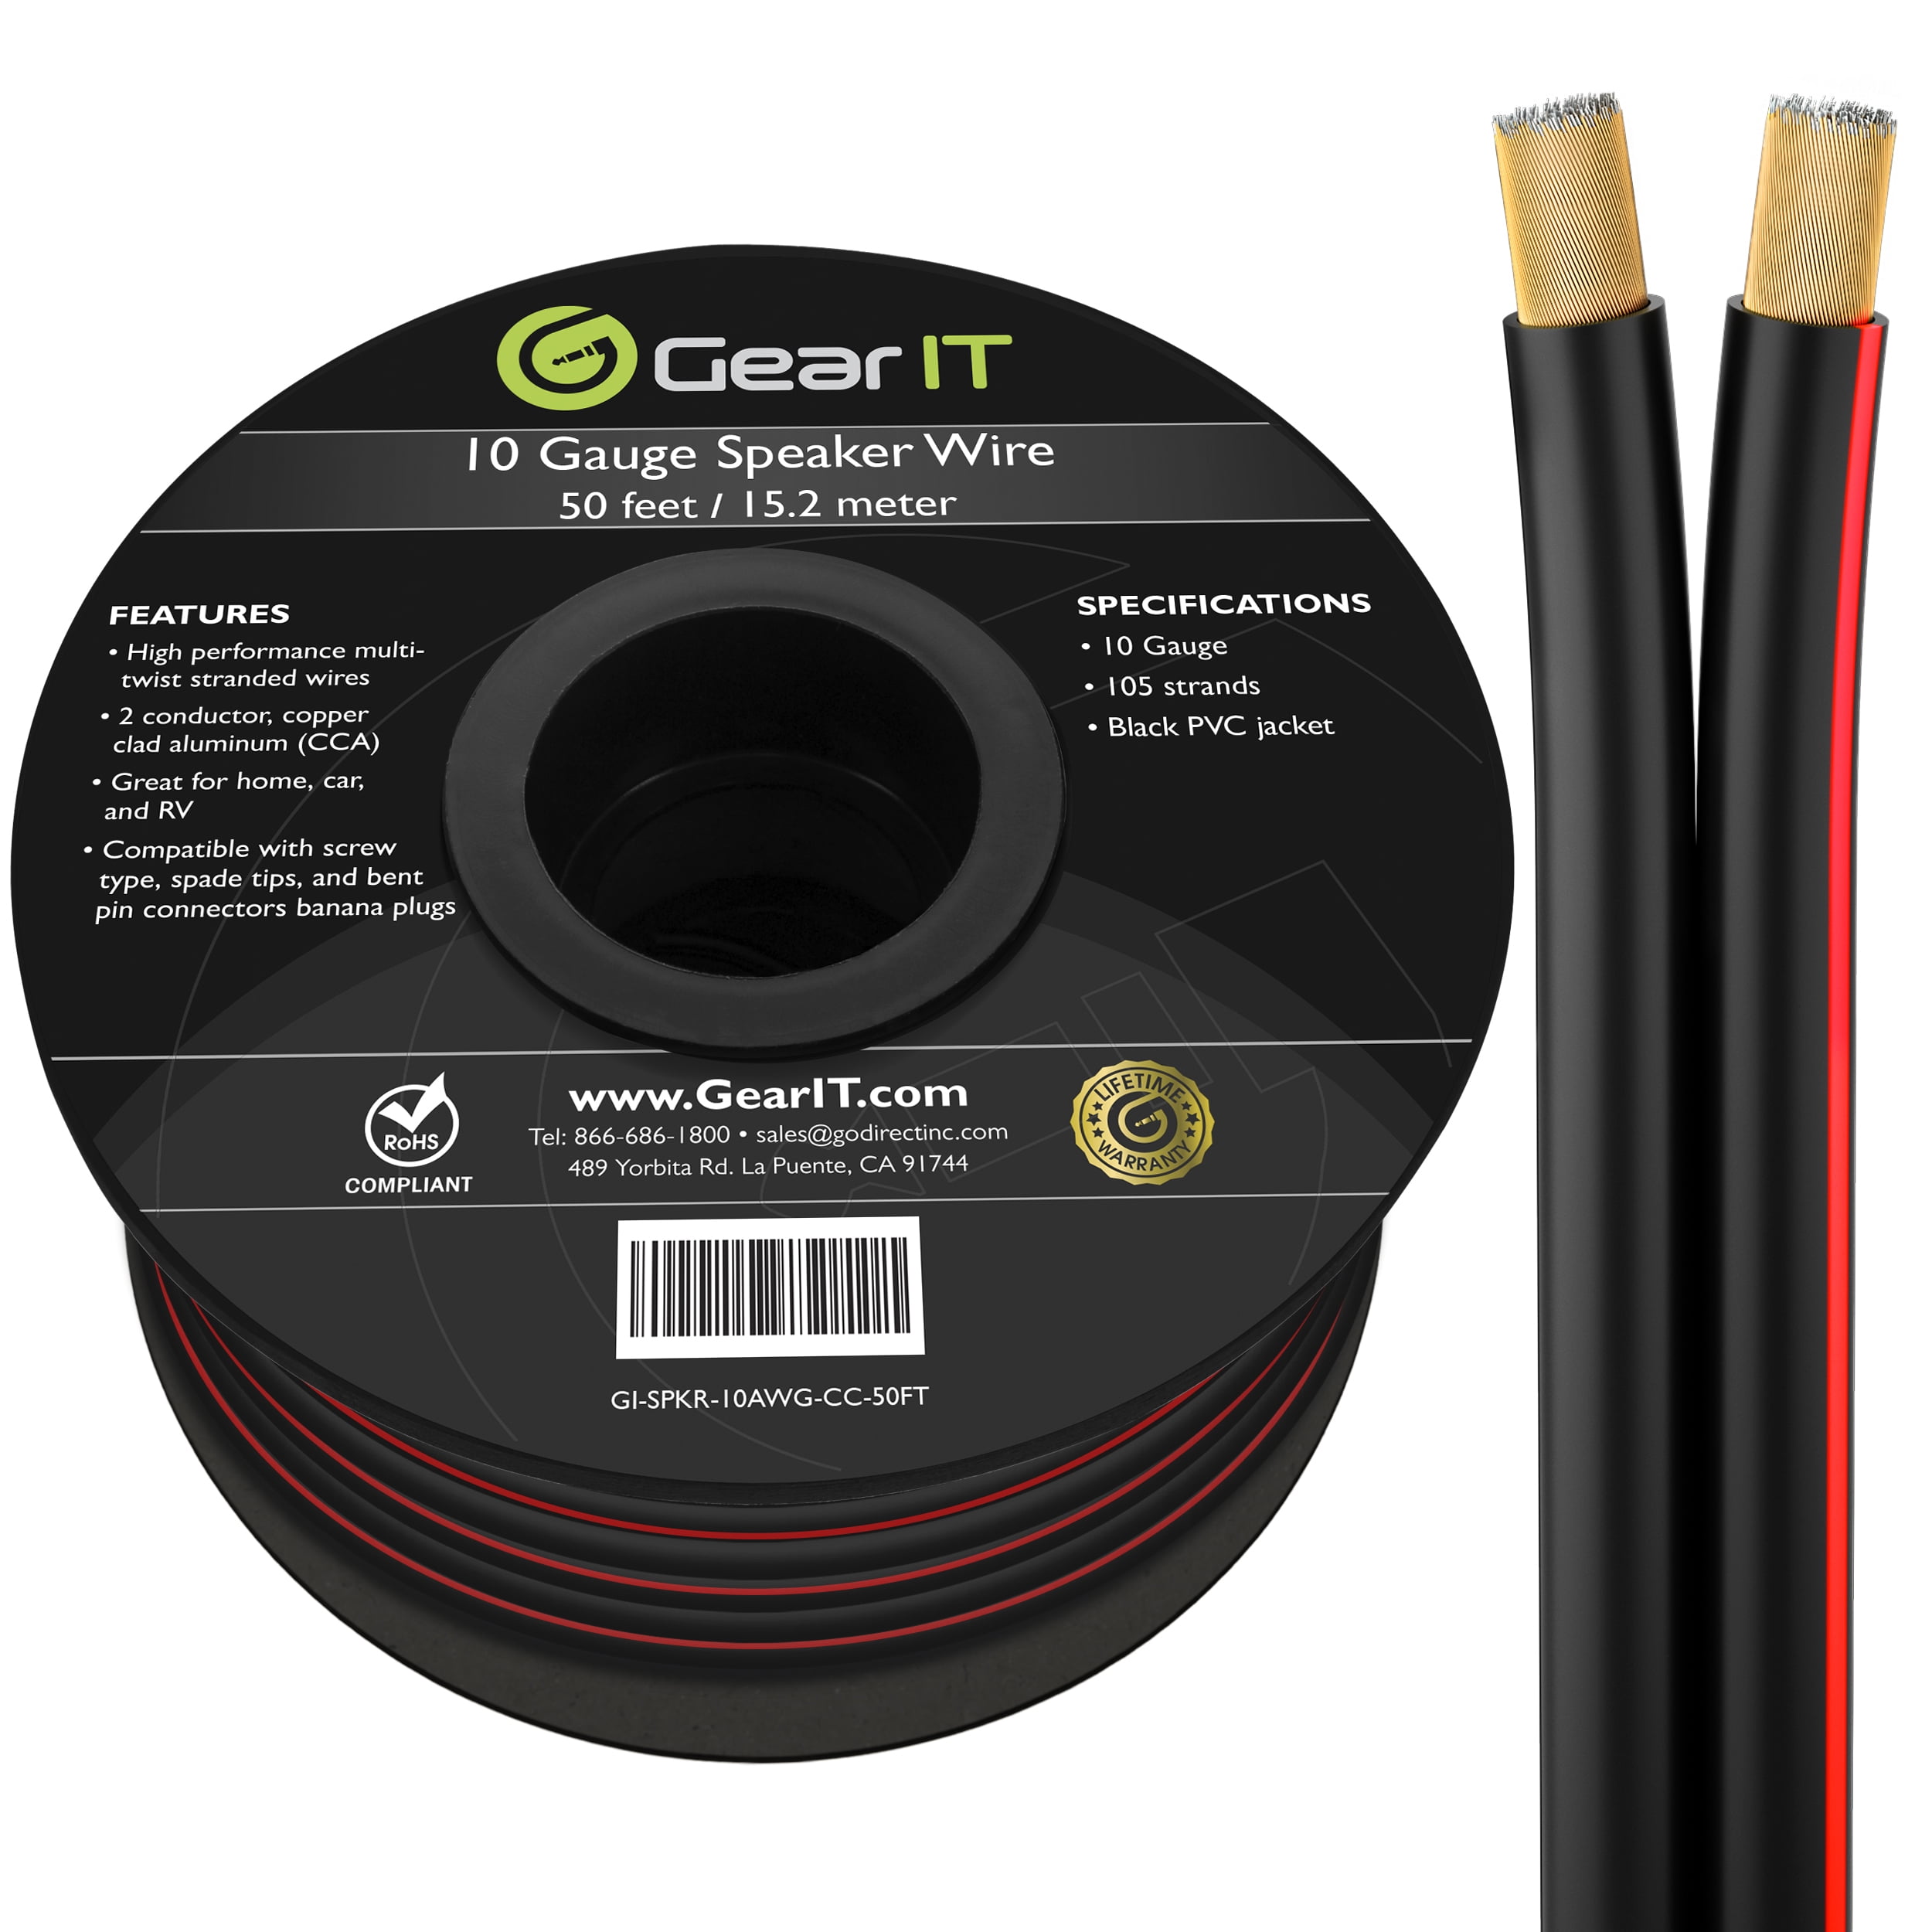 InstallGear 14 Gauge AWG 100ft Speaker Wire Cable Black 